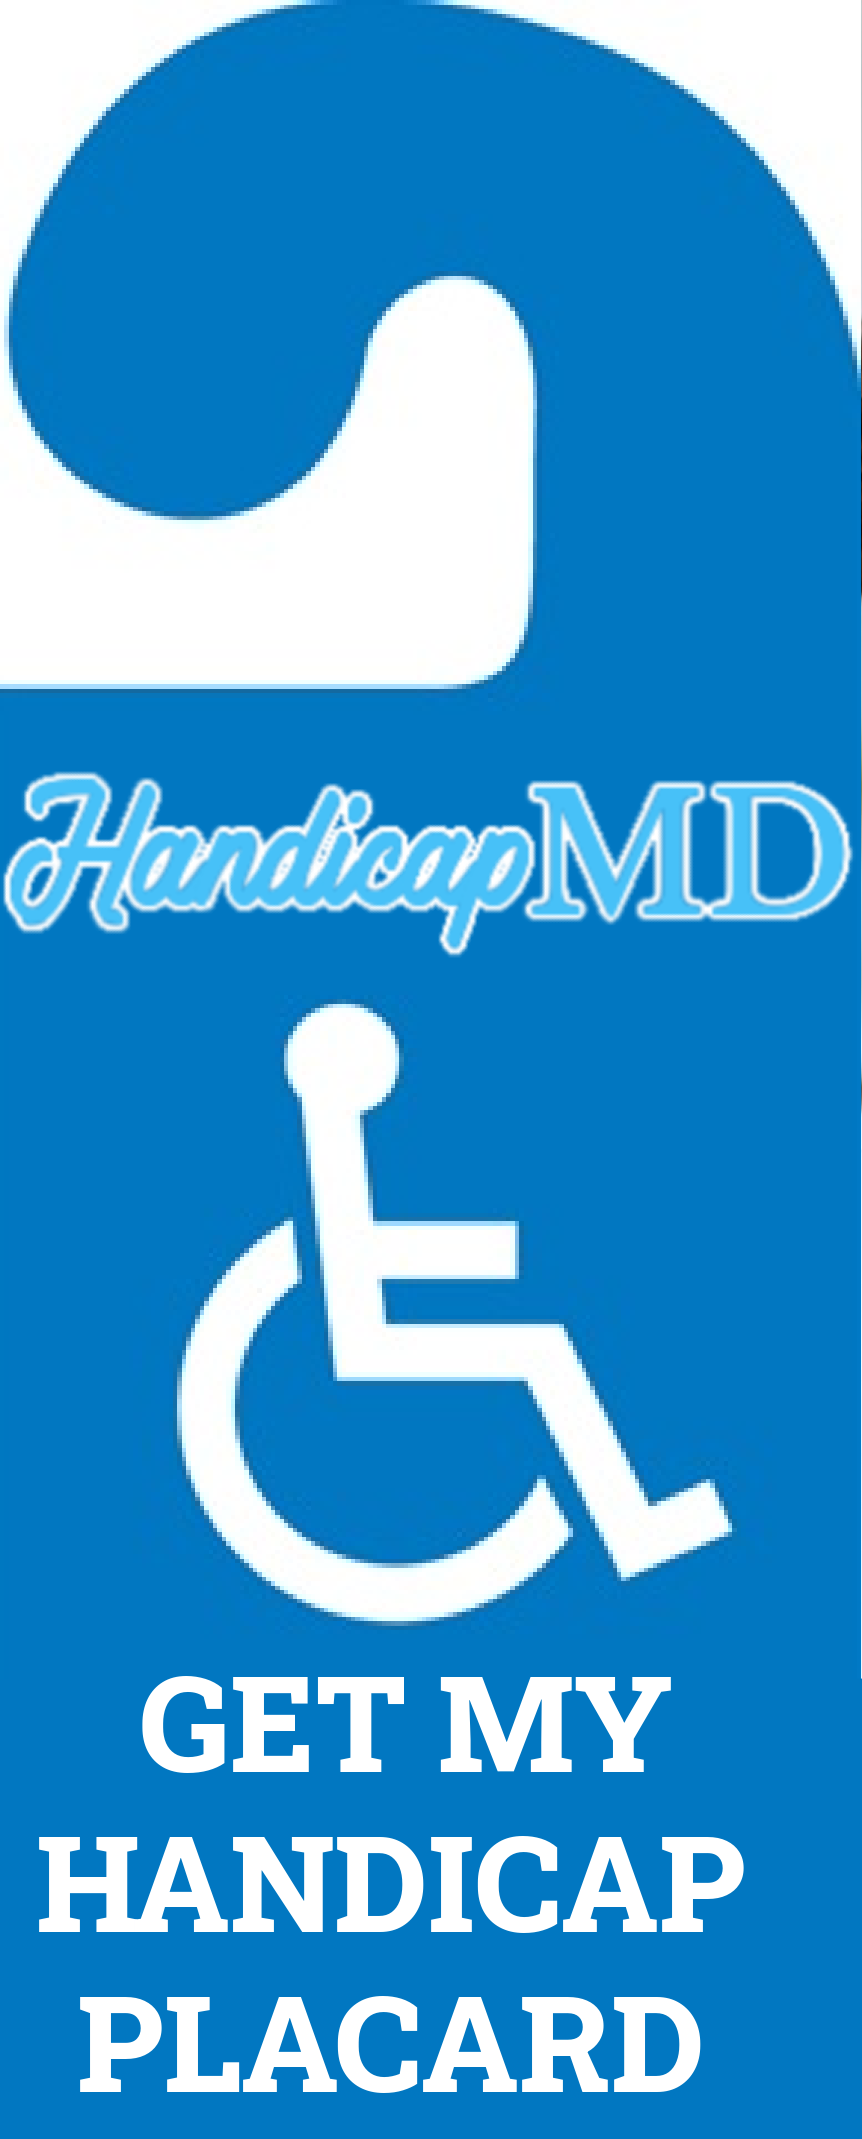 Online Guide to Handicap Parking in Vermont